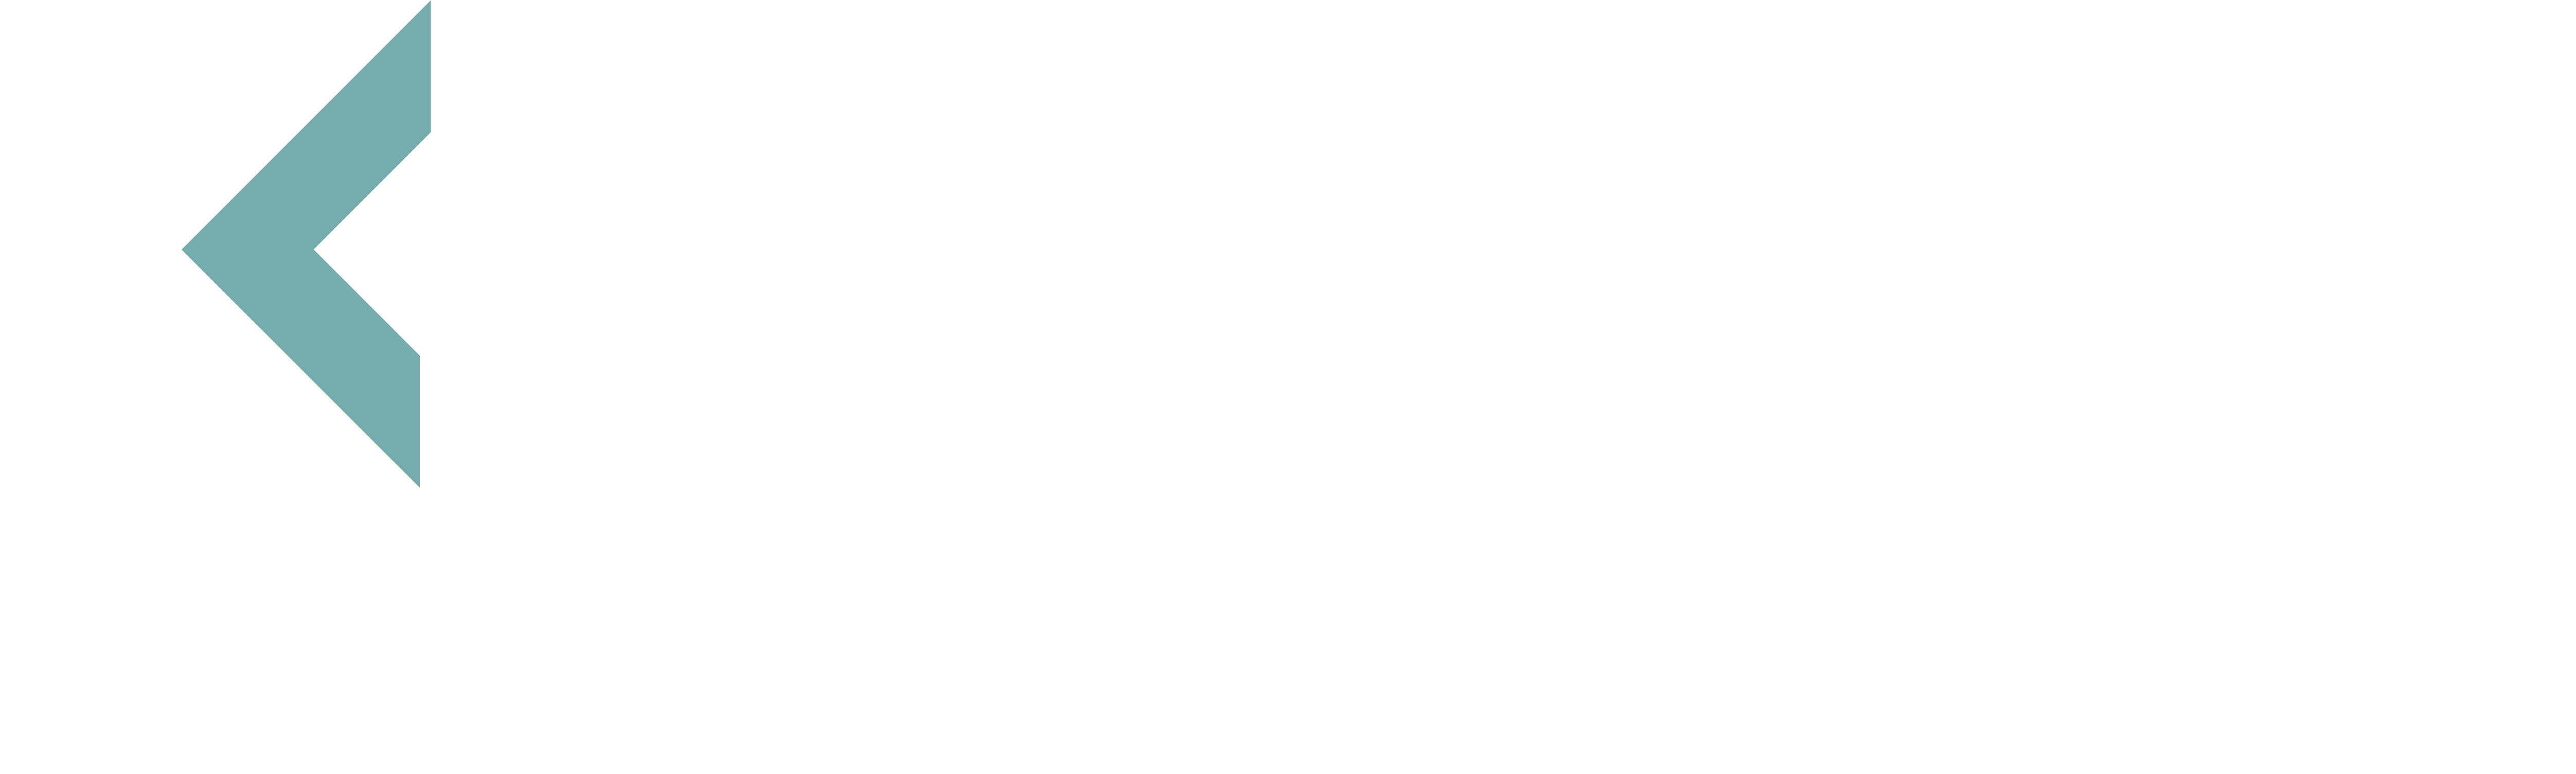 recyber logo_female2